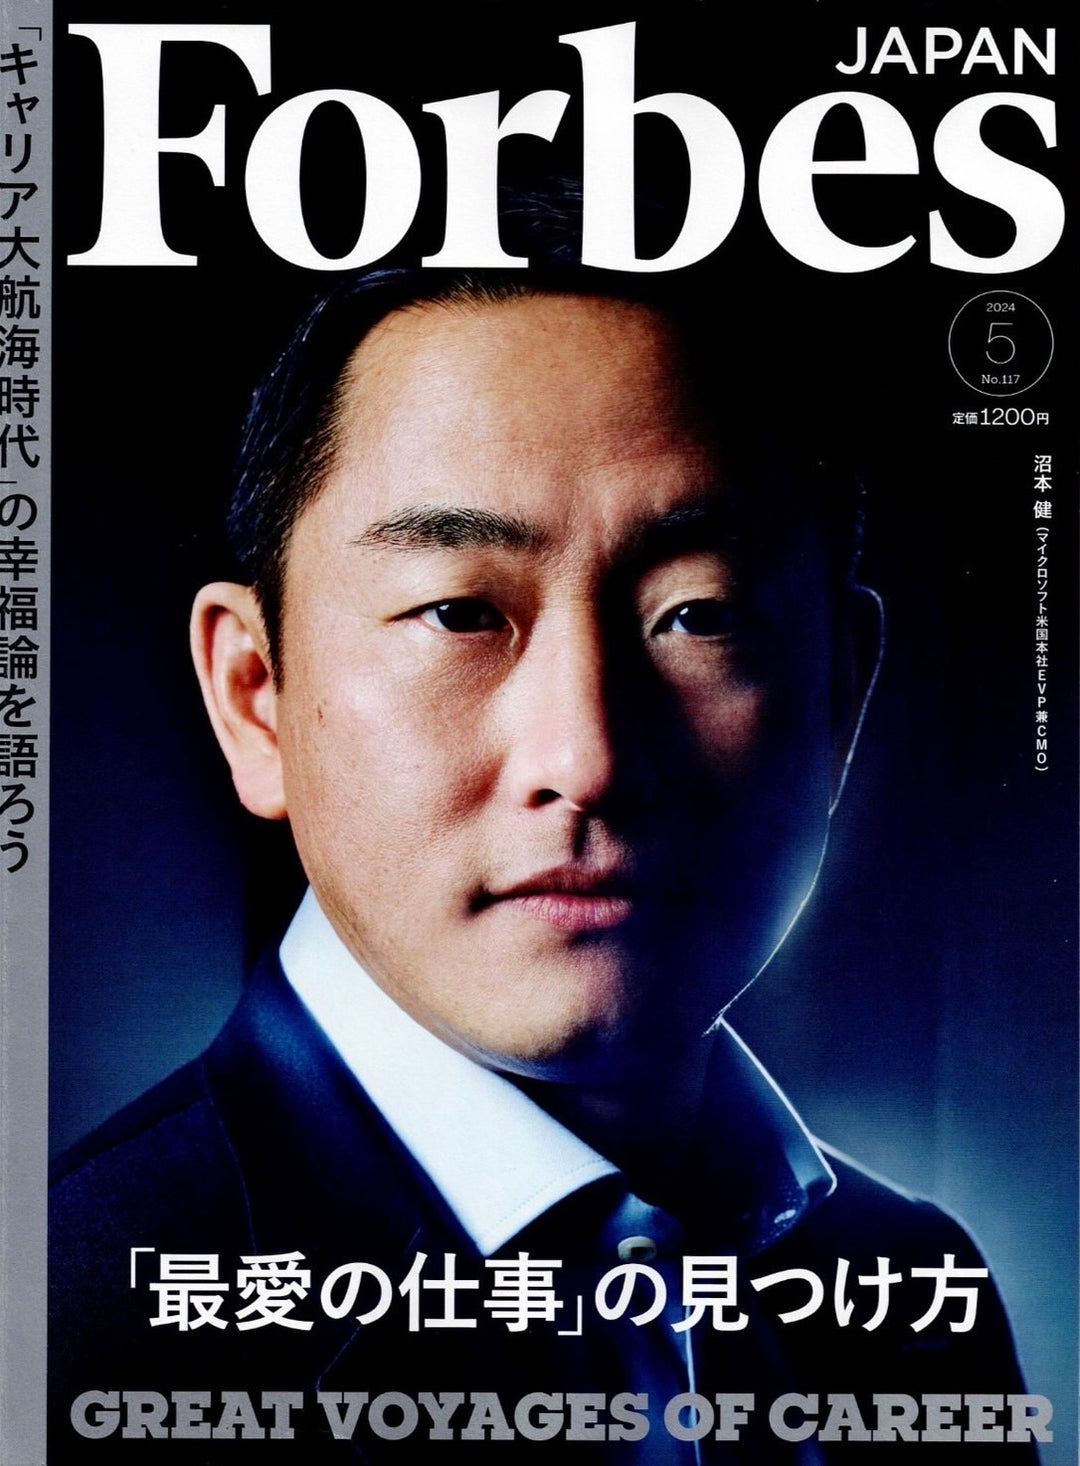 【雑誌掲載】Forbs JAPAN 5月号